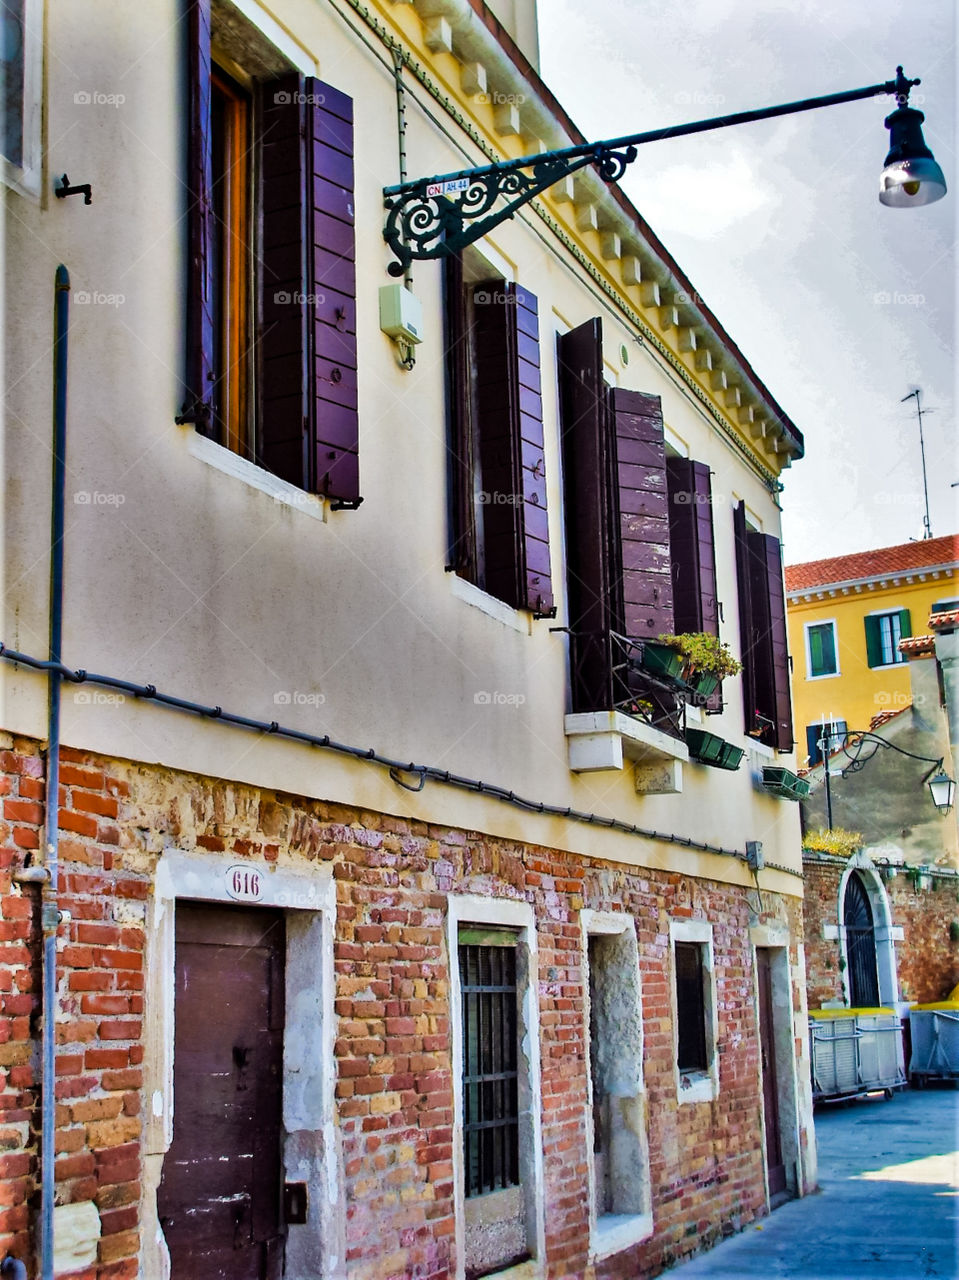 Apartment in Venice Italy 🇮🇹.